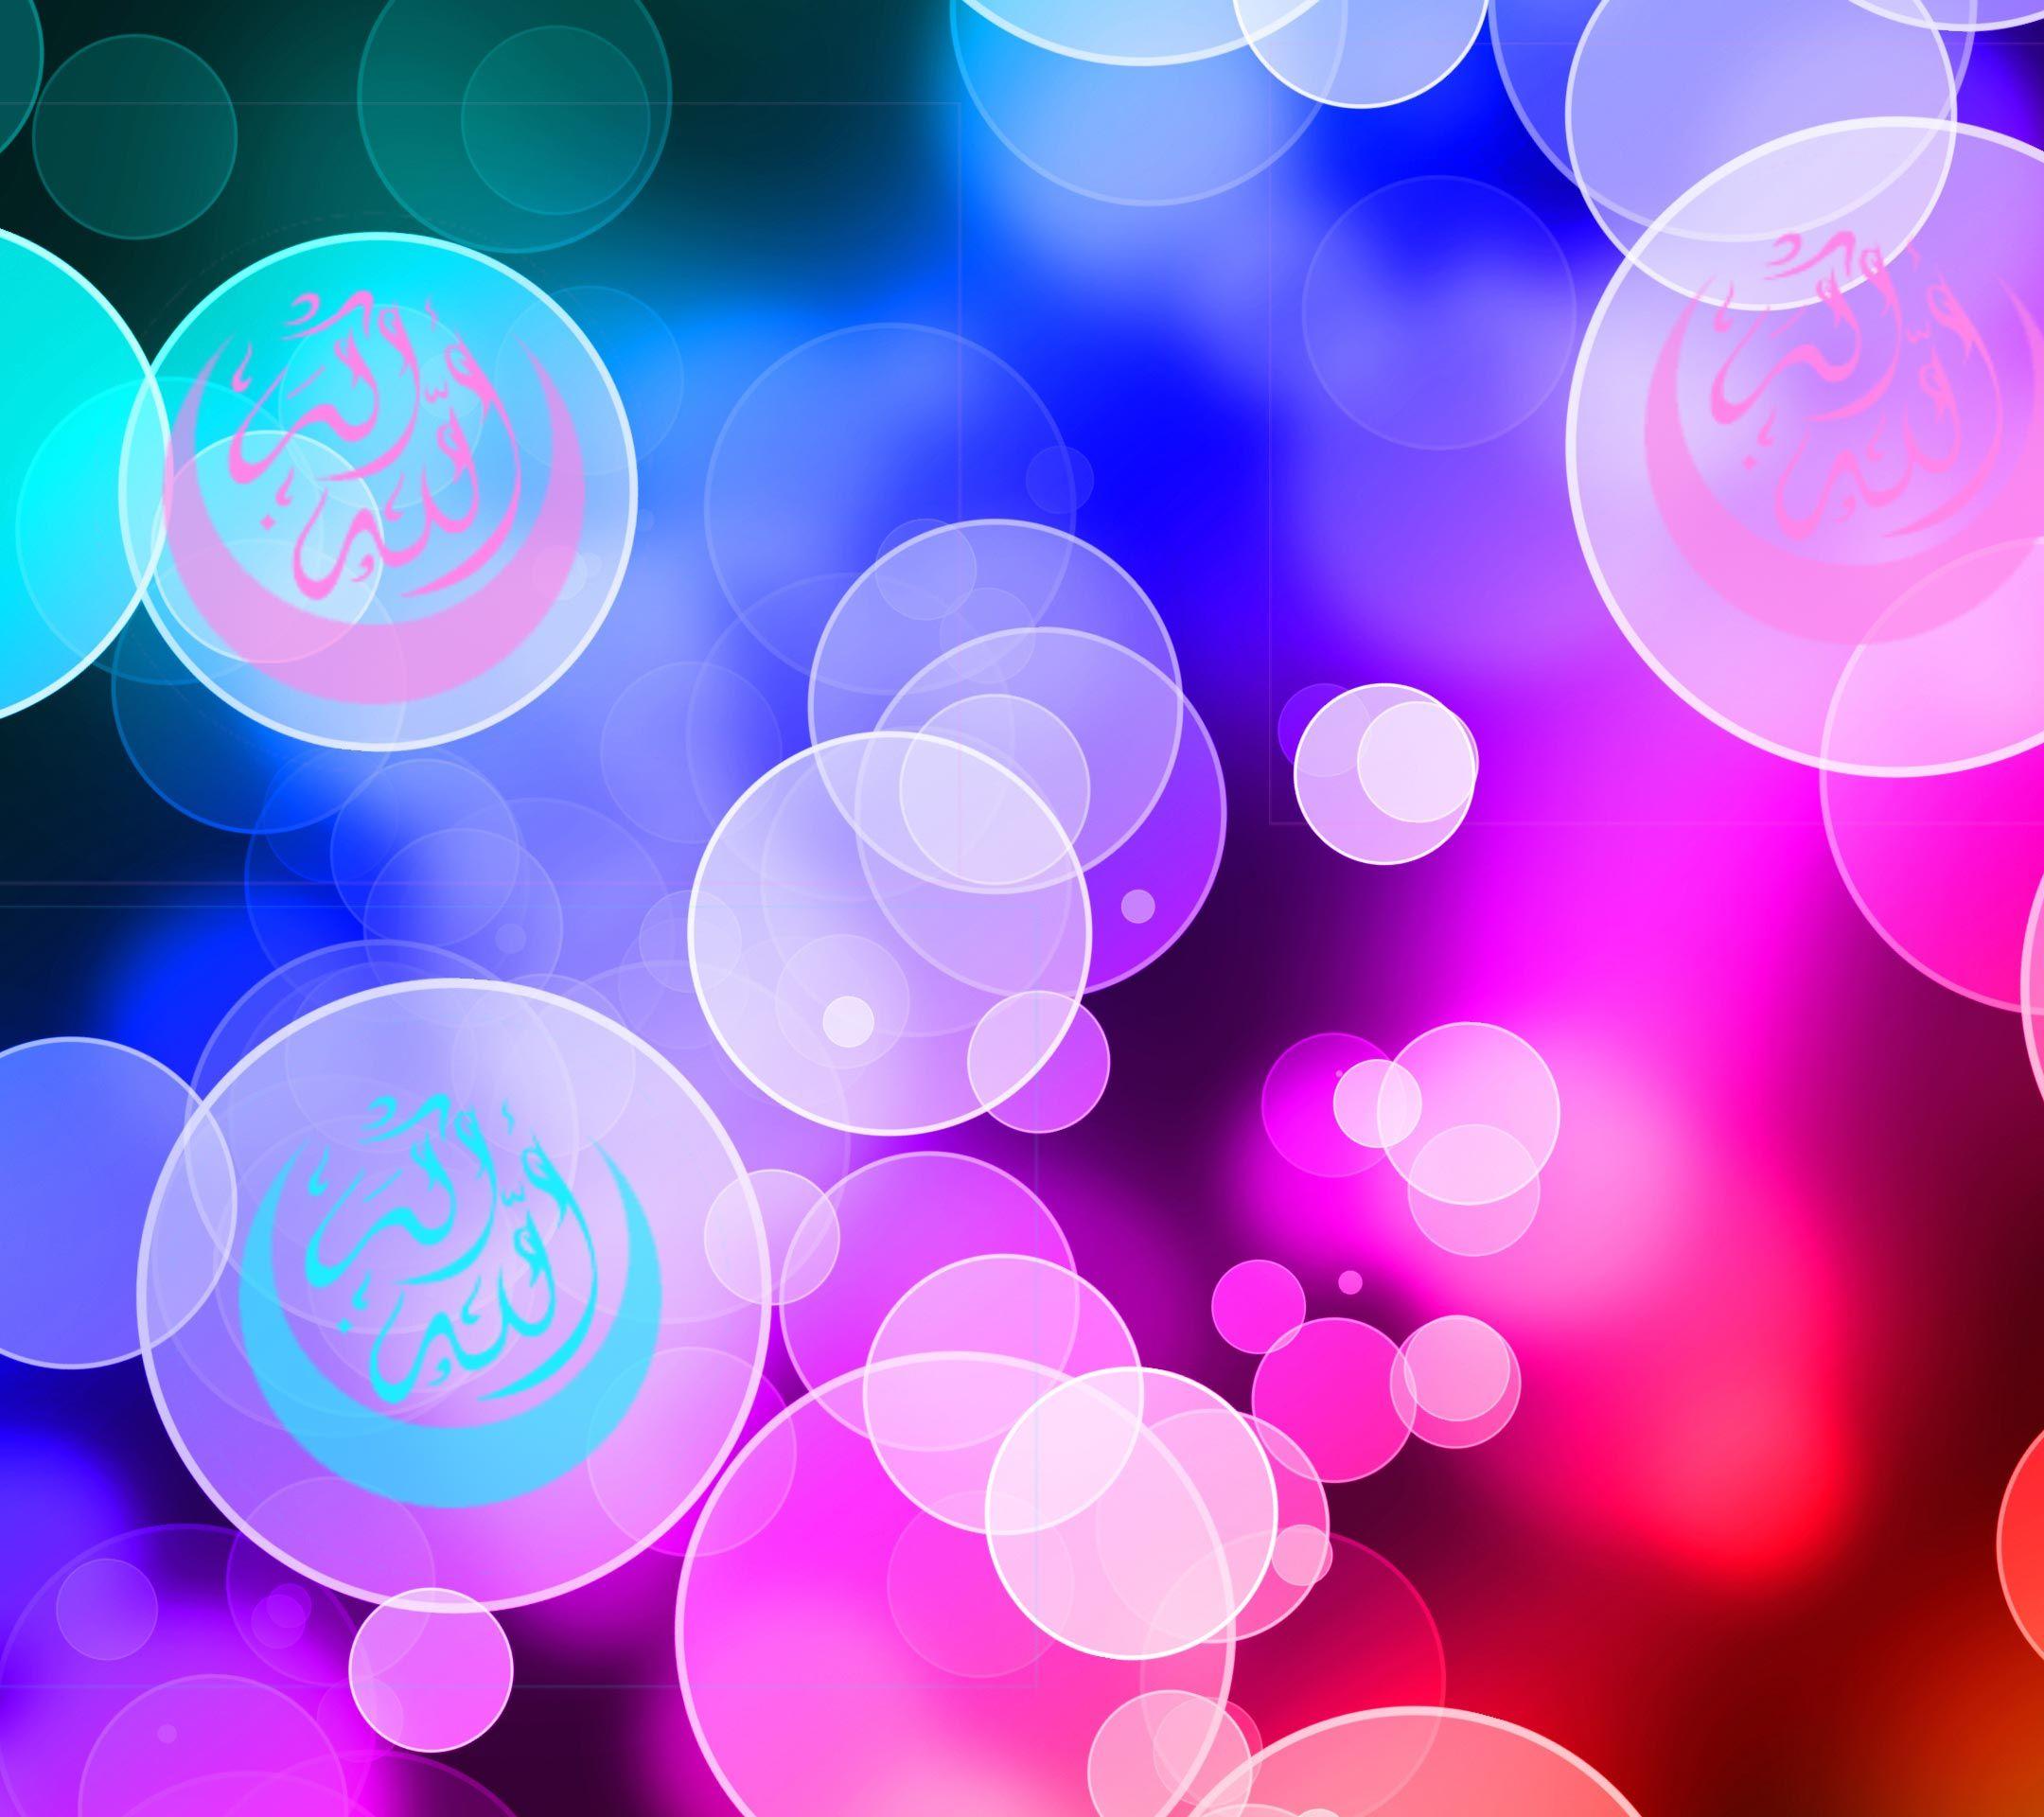 Nexus 5 Islamic Wallpaper 3 Islamic Apps